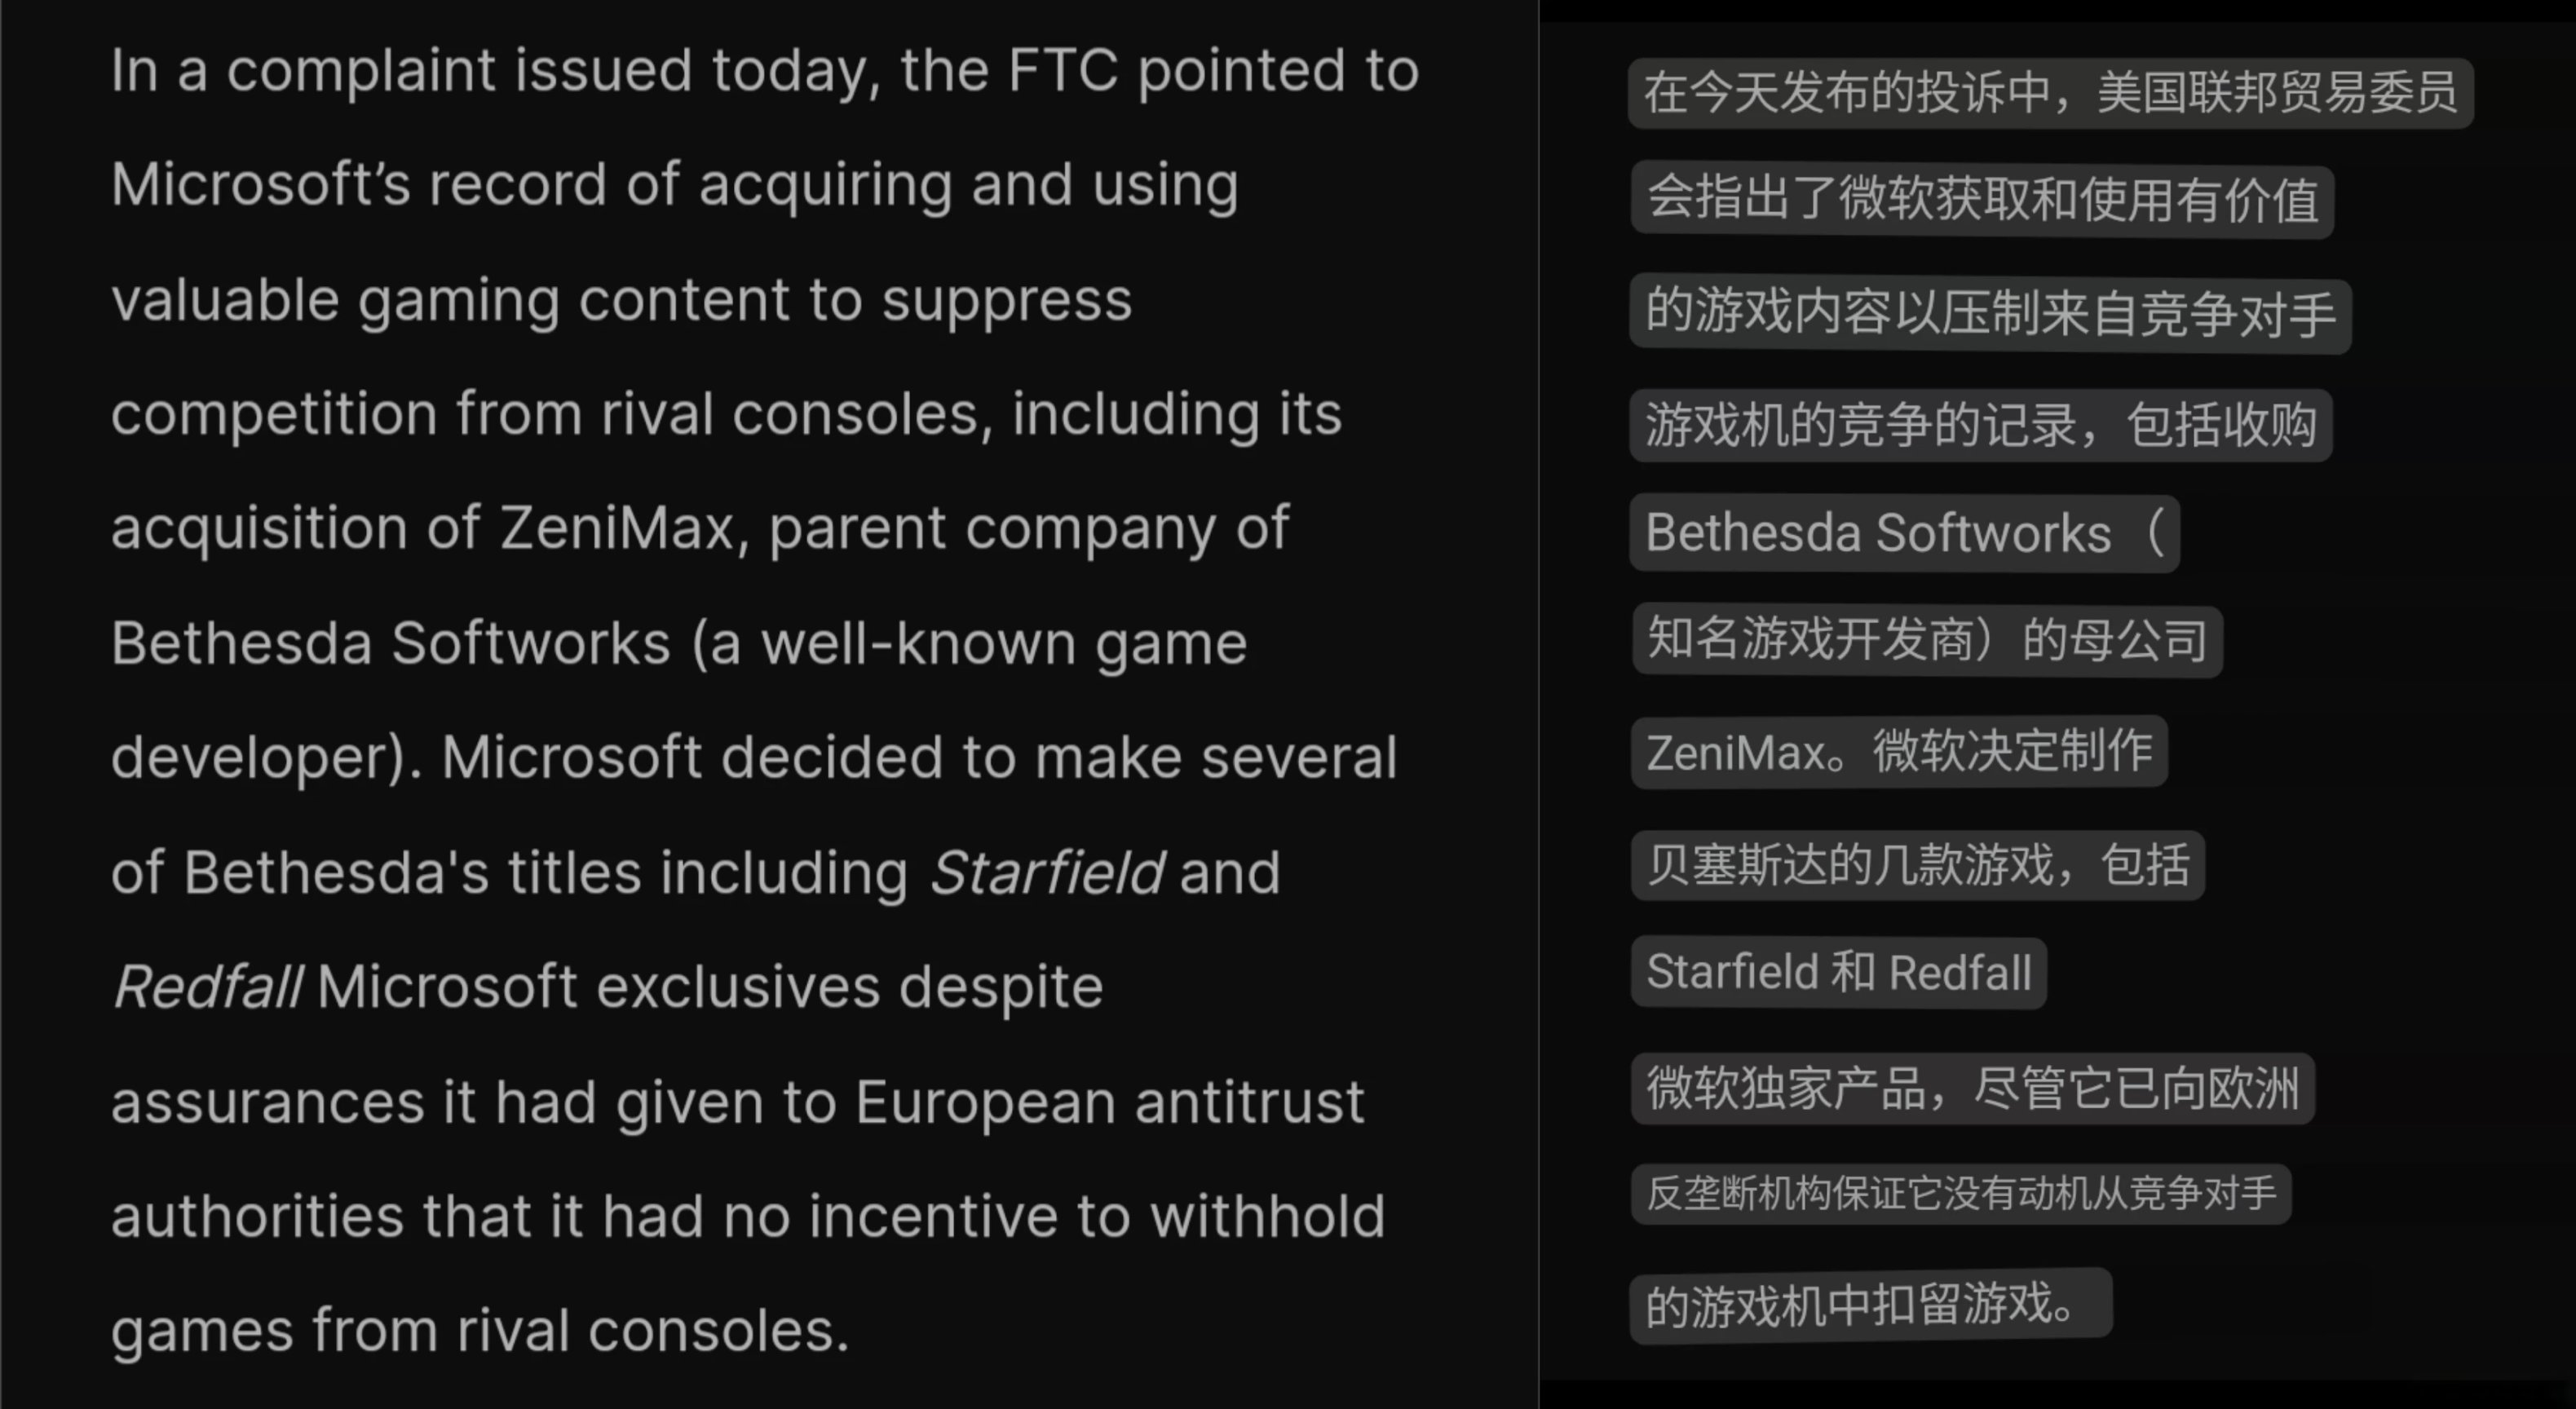 【PC游戏】FTC宣布起诉微软,欧盟委员会就美国FTC起诉微软表态-第1张